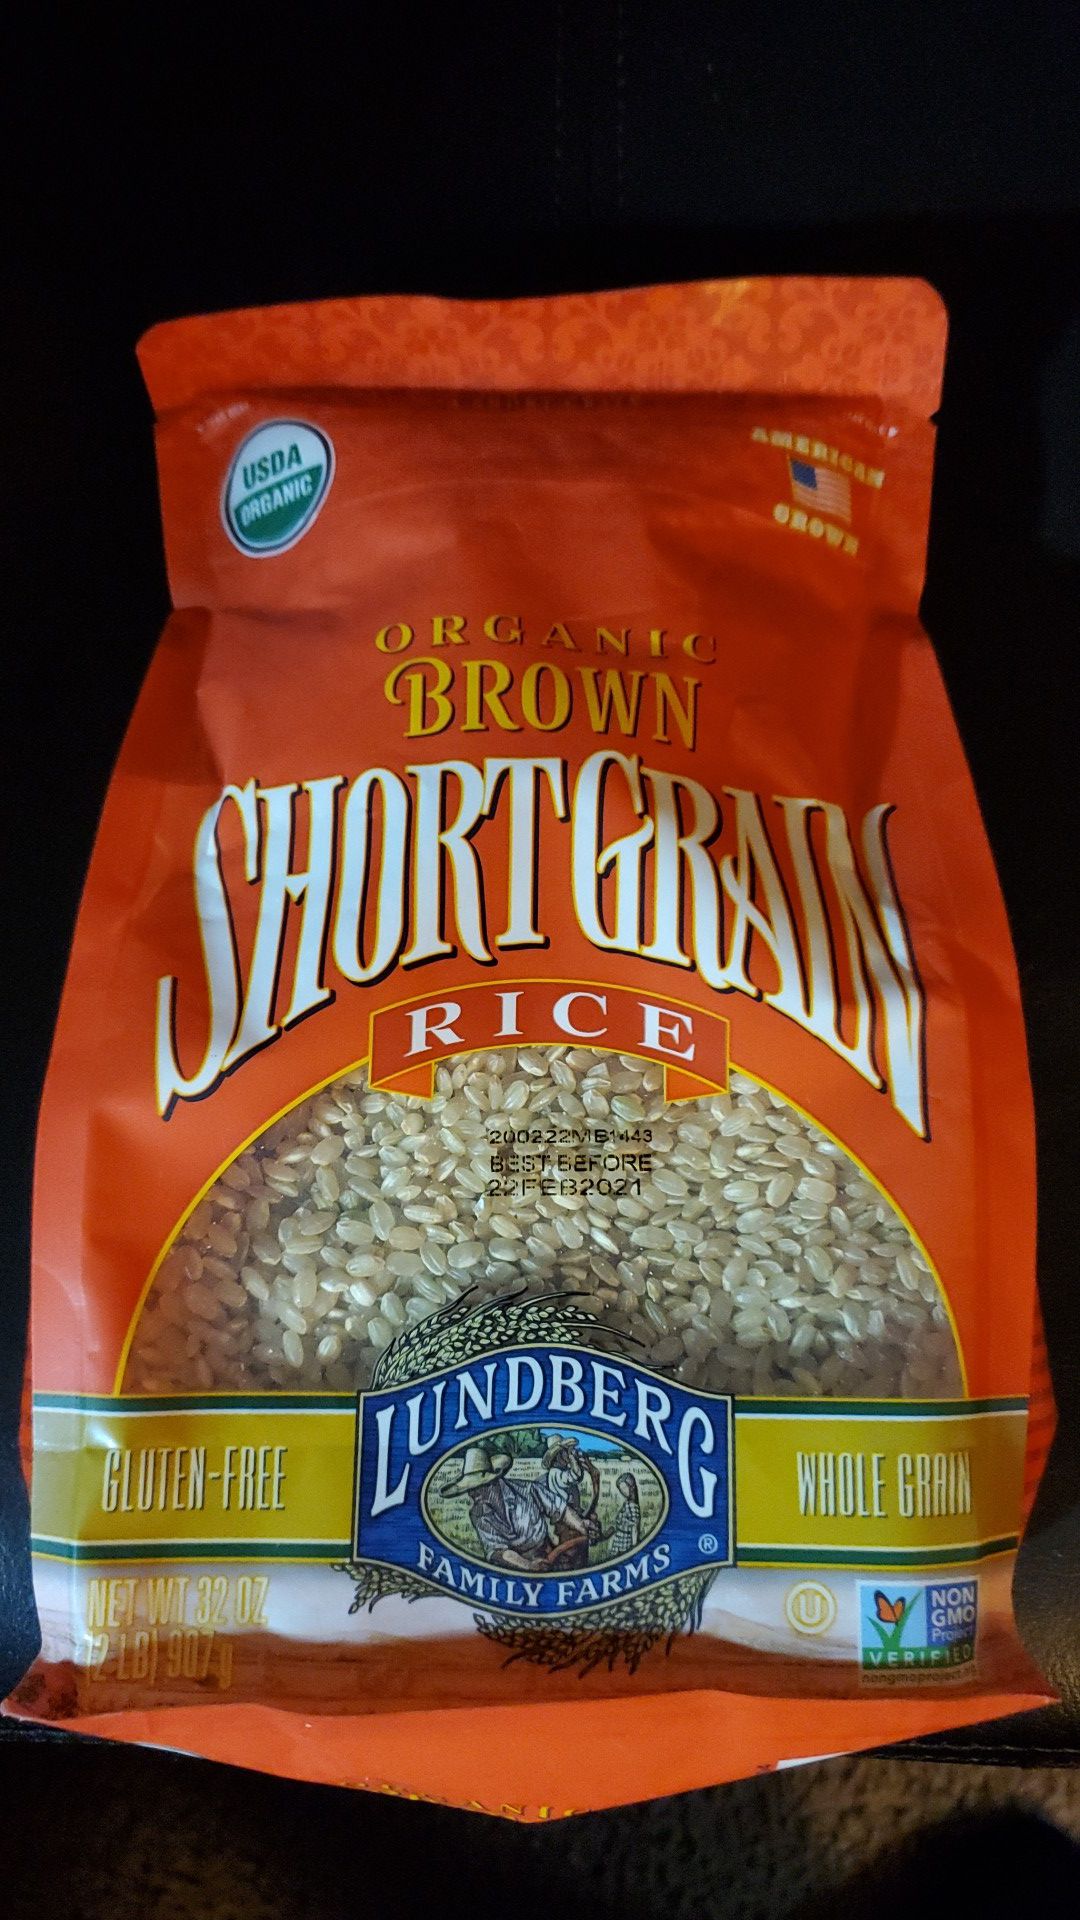 Lundberg organic brown short grain rice best before February 2021 1 / 2 lb bag $2